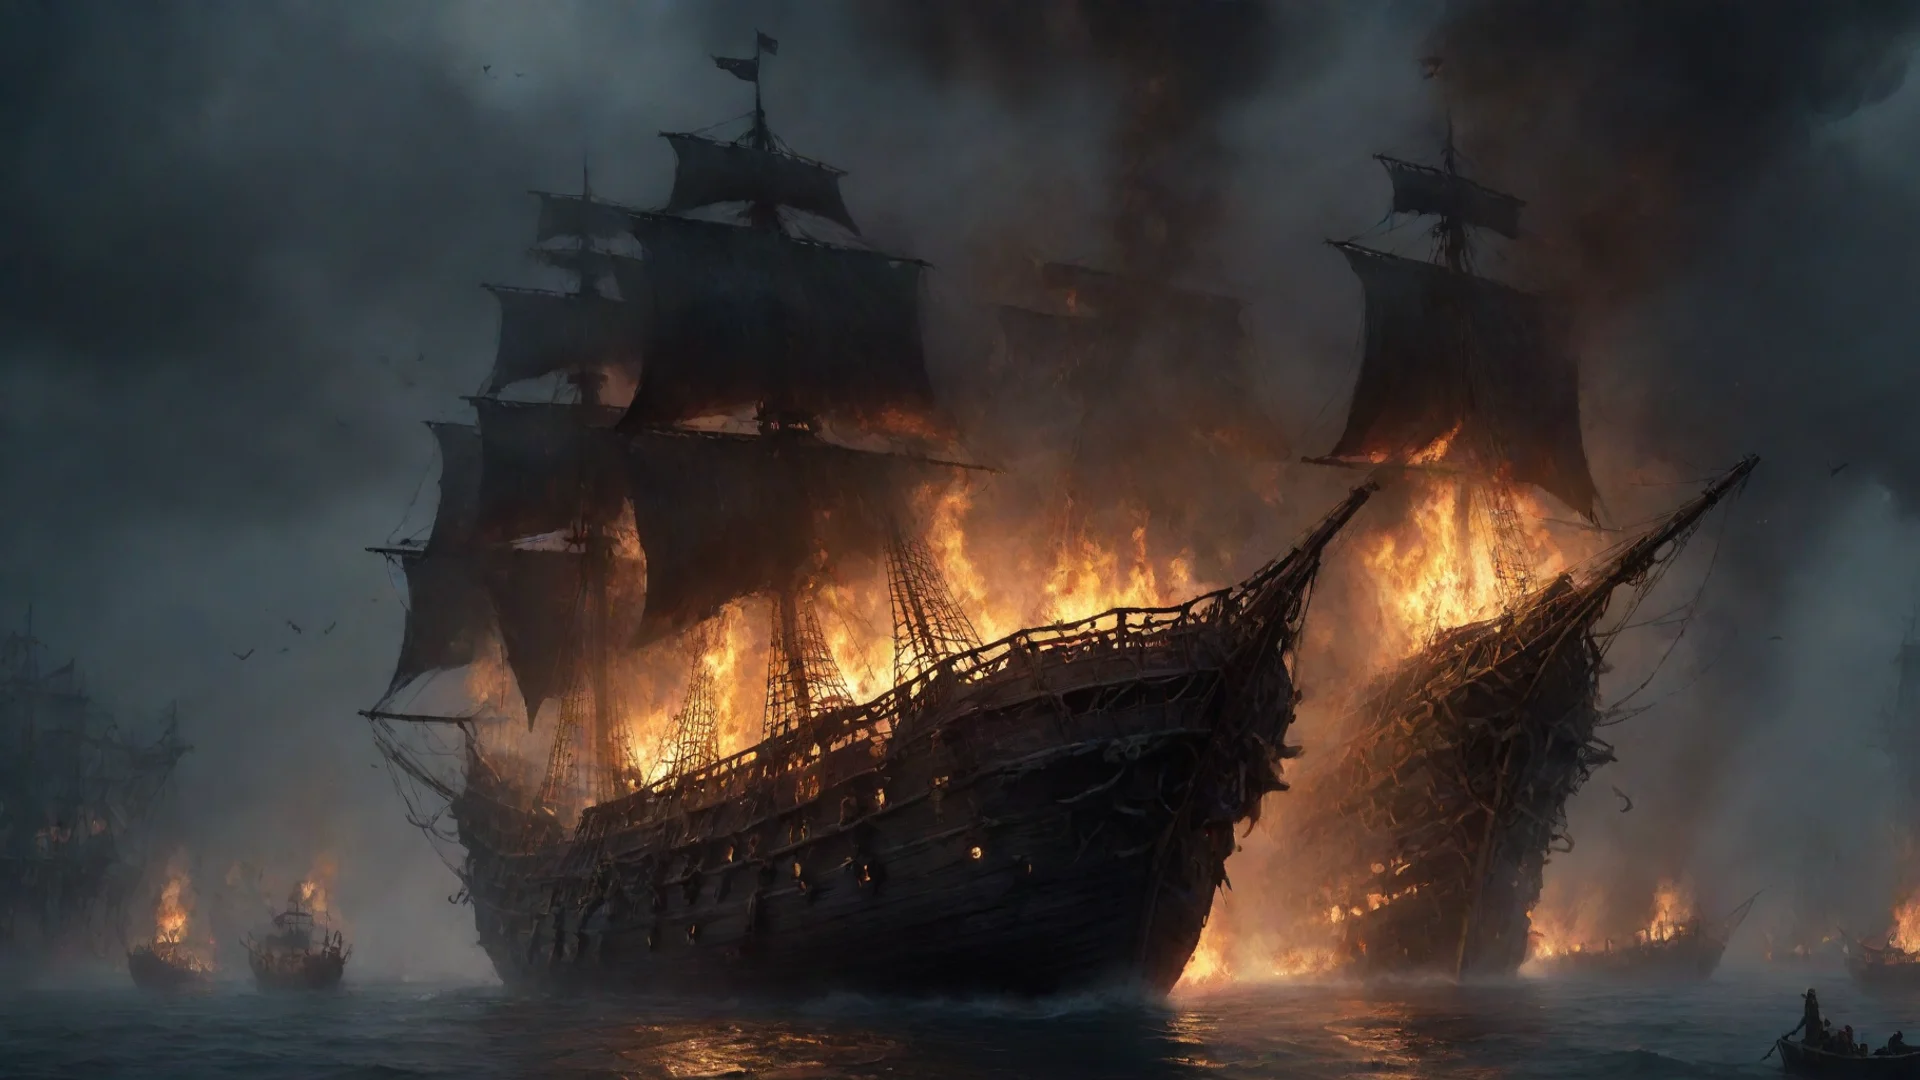 aiartstation art burning pirate ship concept art dark smoldering skeletons confident engaging wow 3 wide